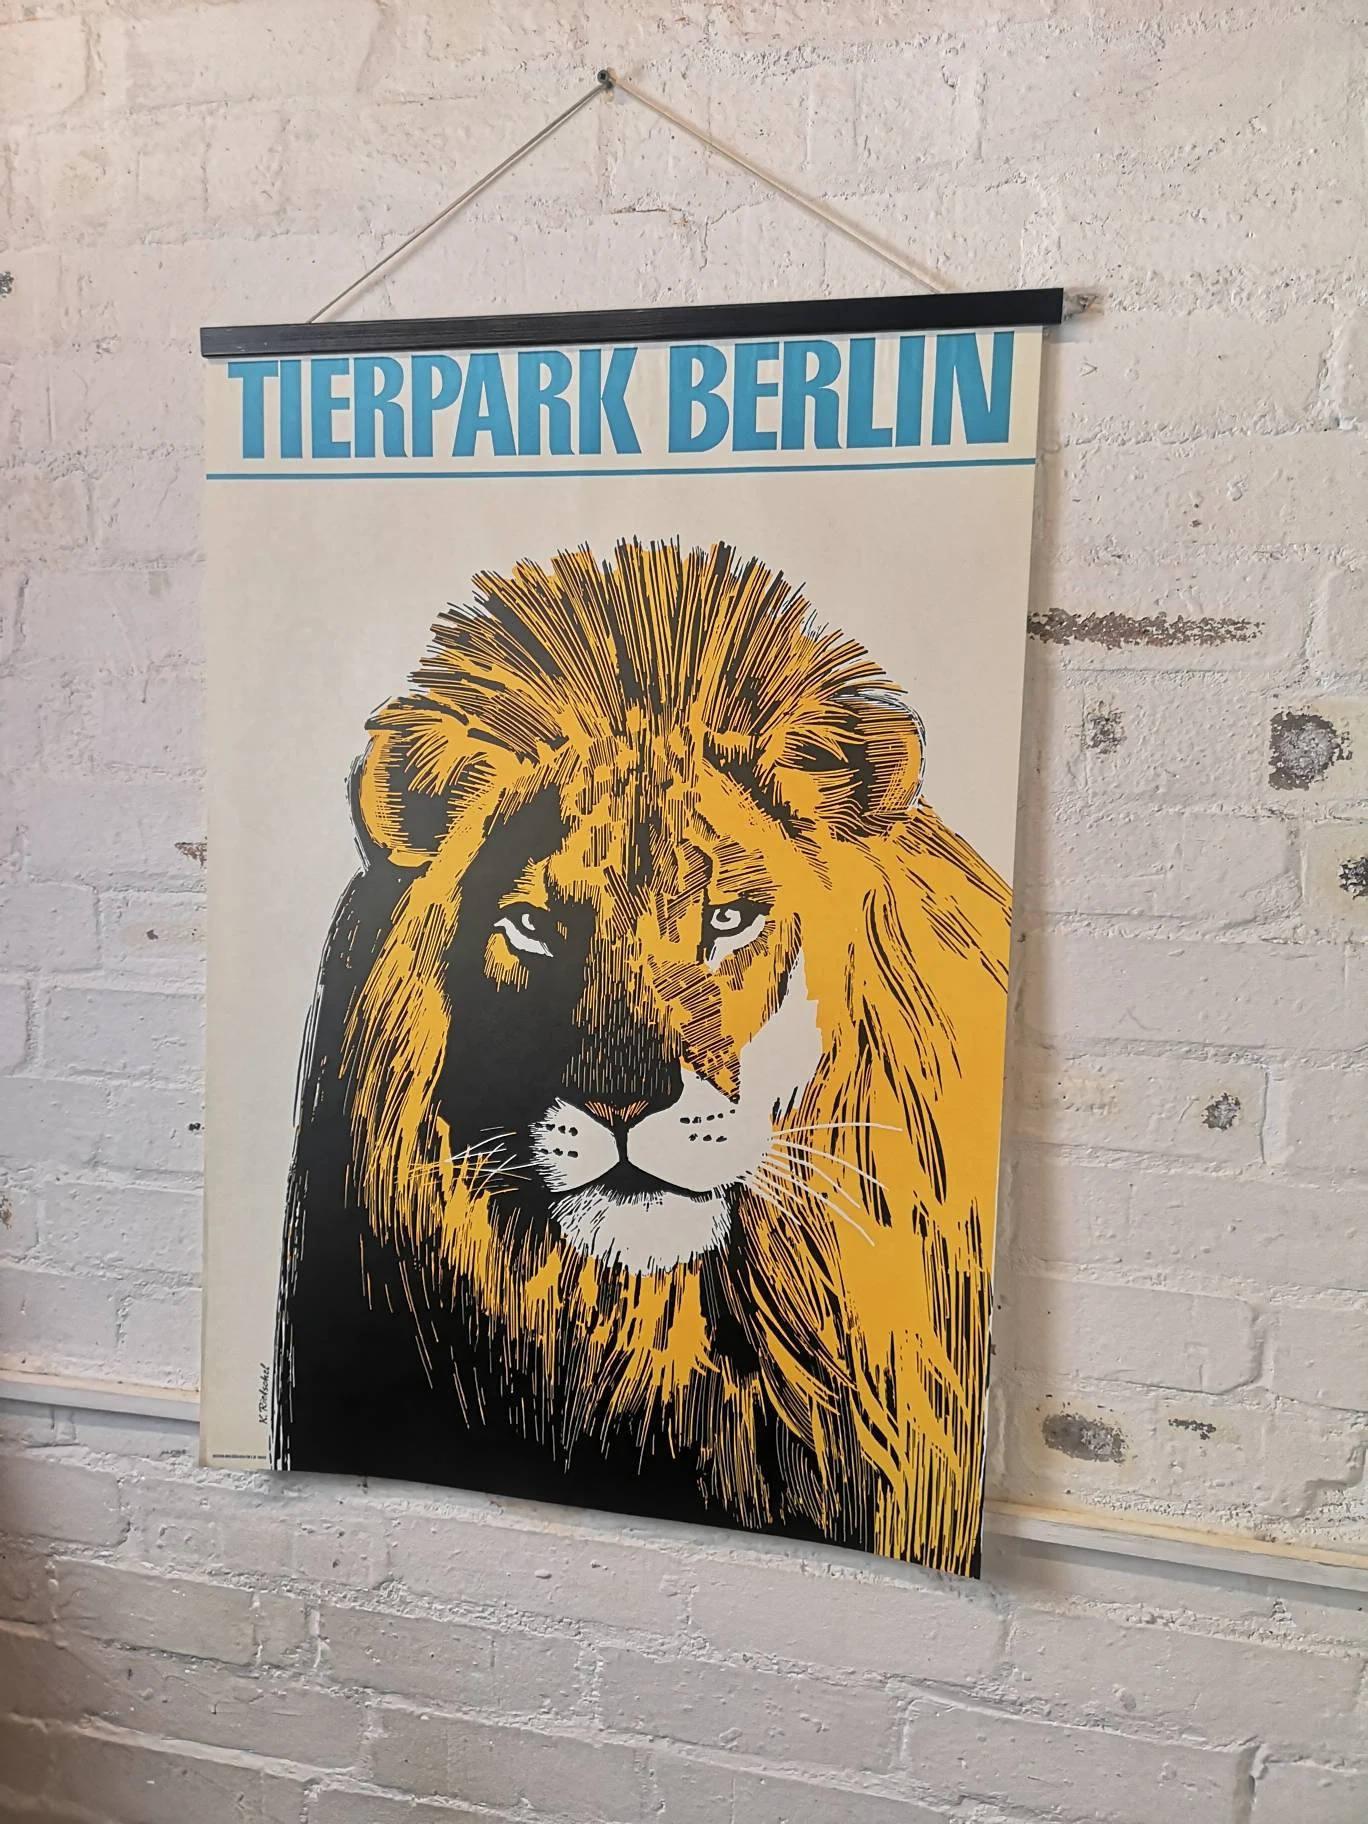 Vintage 1970s Tierpark Berlin Original Zoo Poster Advertising Of A Lion